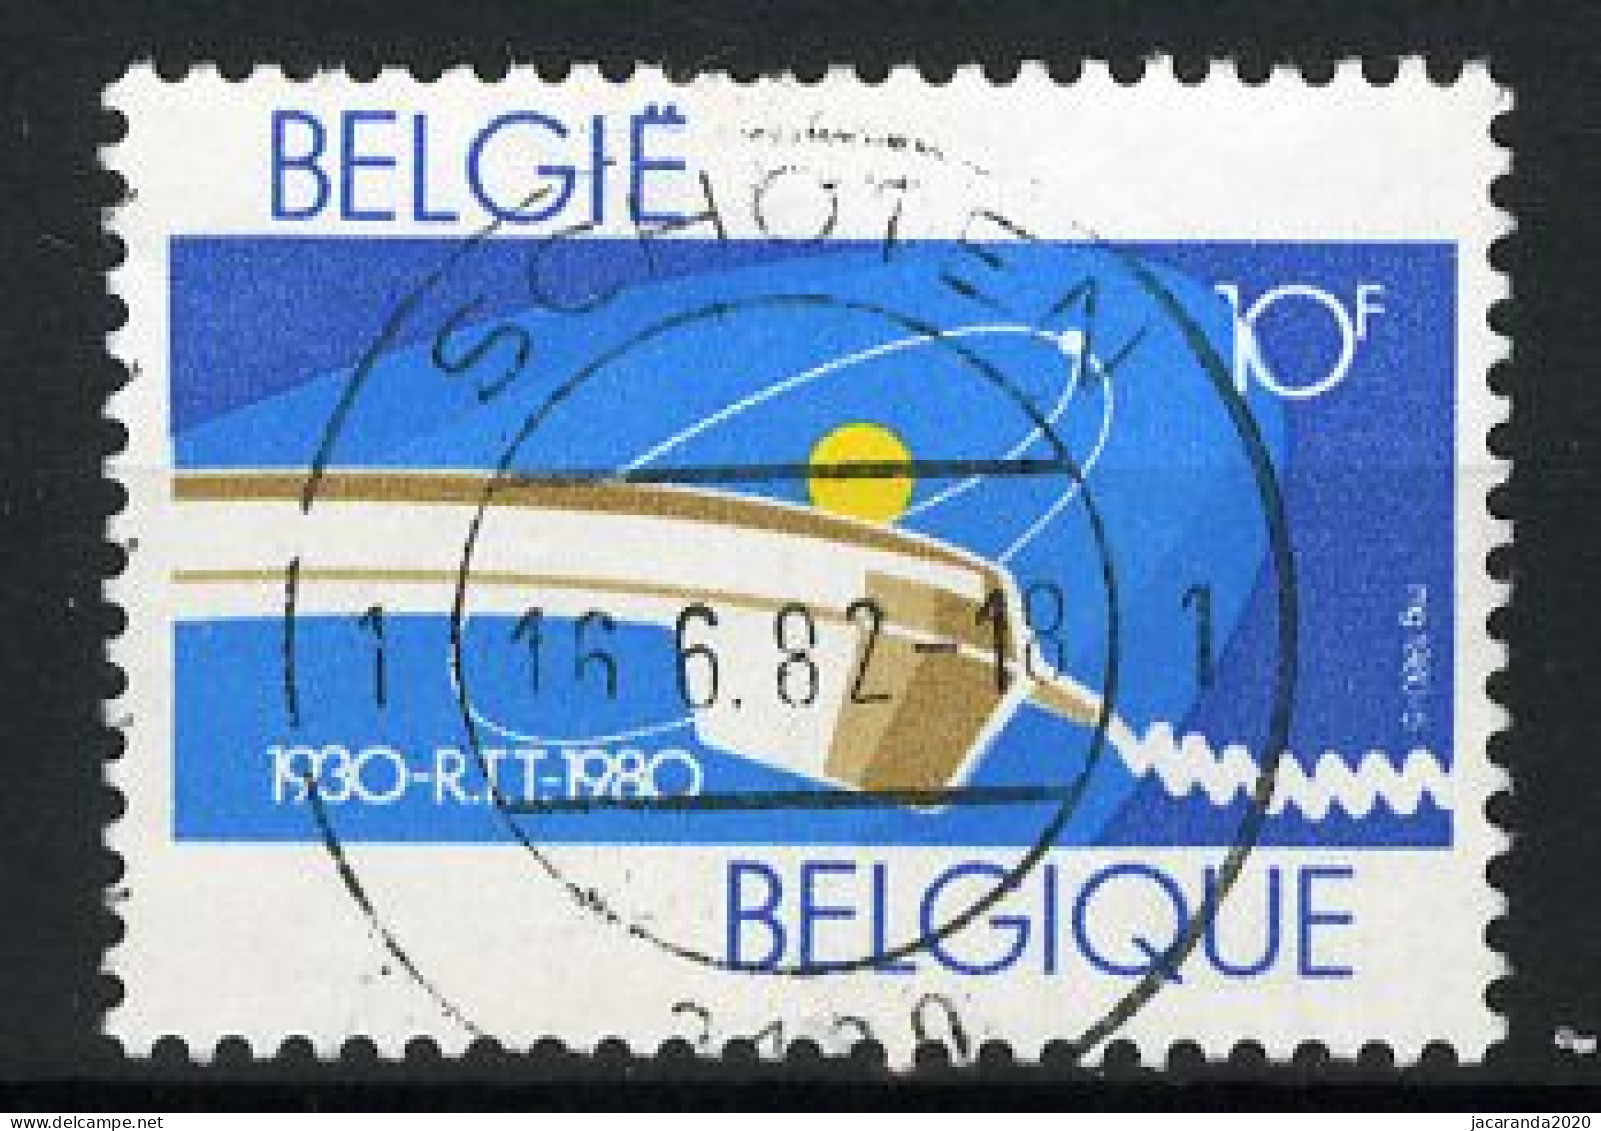 België 1969 - 50 Jaar R.T.T. - Gestempeld - Oblitéré -used - Usati